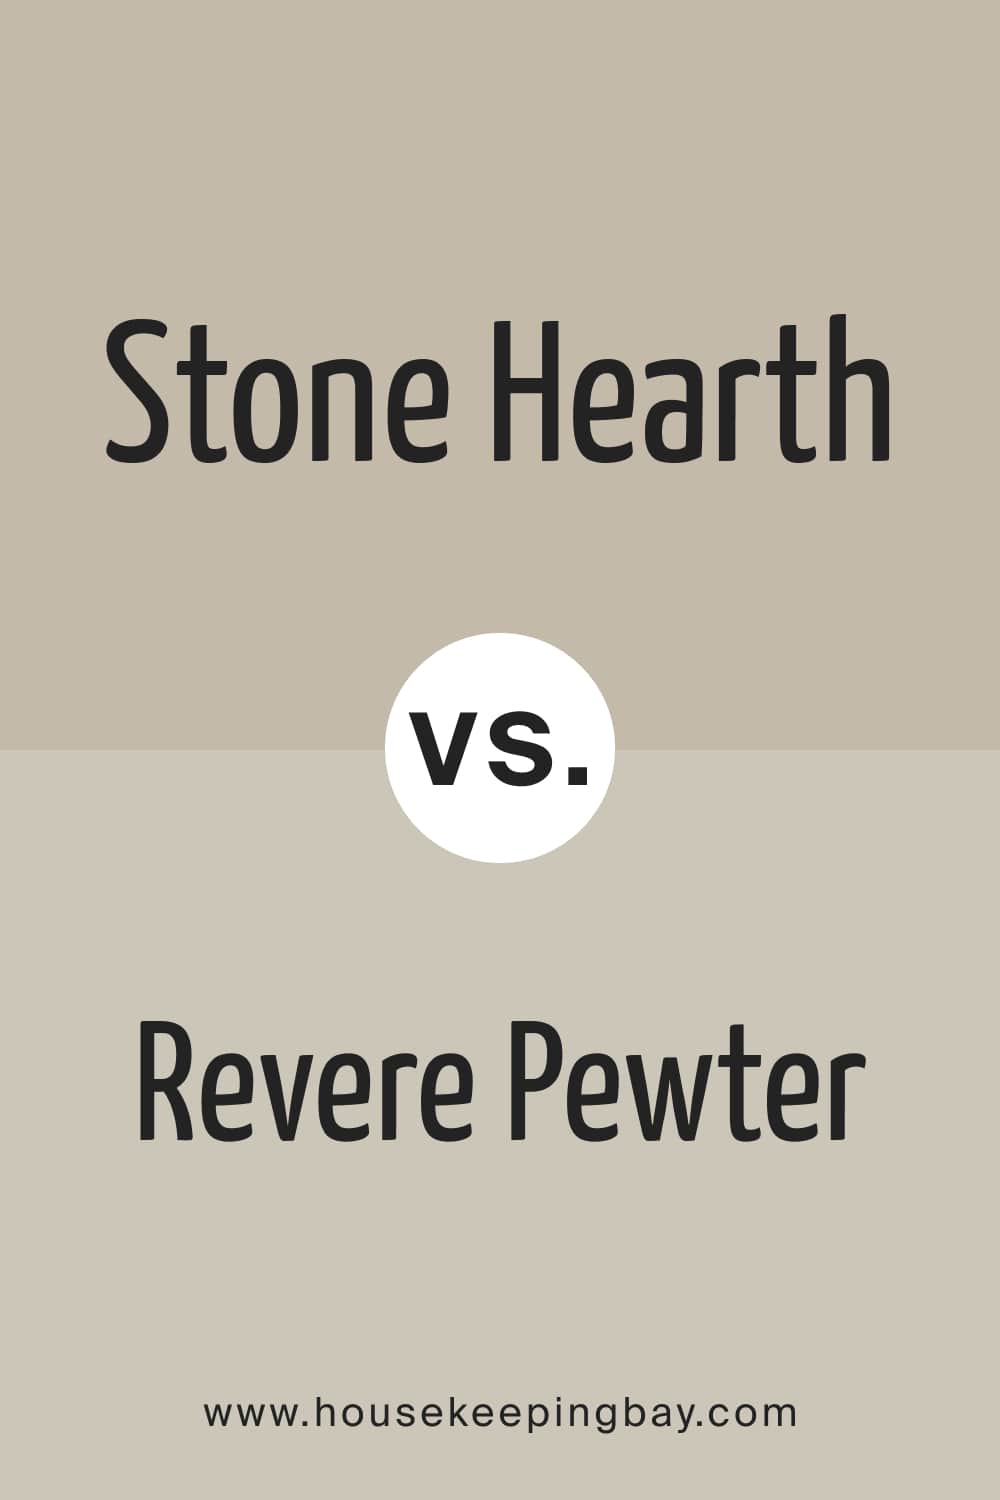 Stone Hearth vs. Revere Pewter